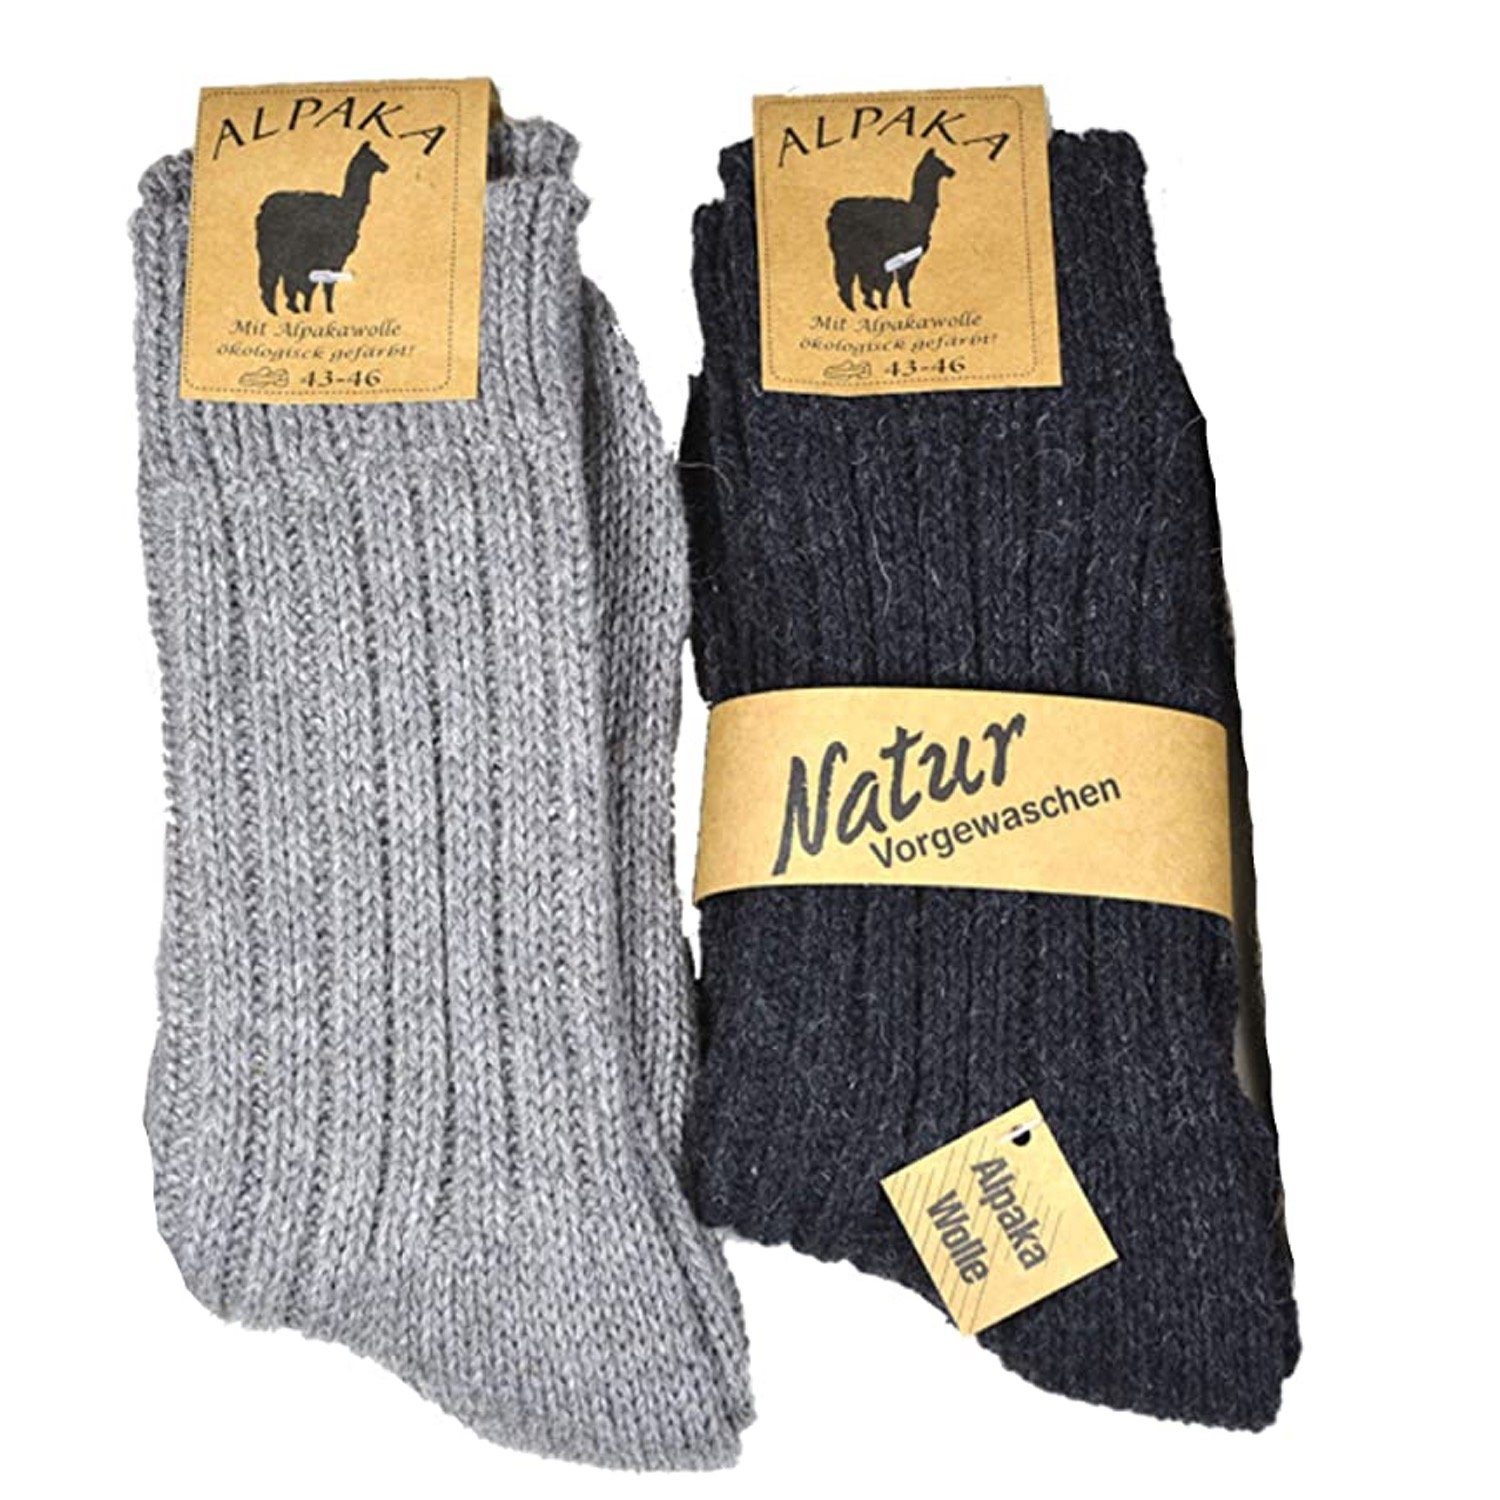 gestrickt (2-Paar) Socken Wollsocken Alpaka underwear wie Cocain grau-schwarz selbst Socken Stricksocken